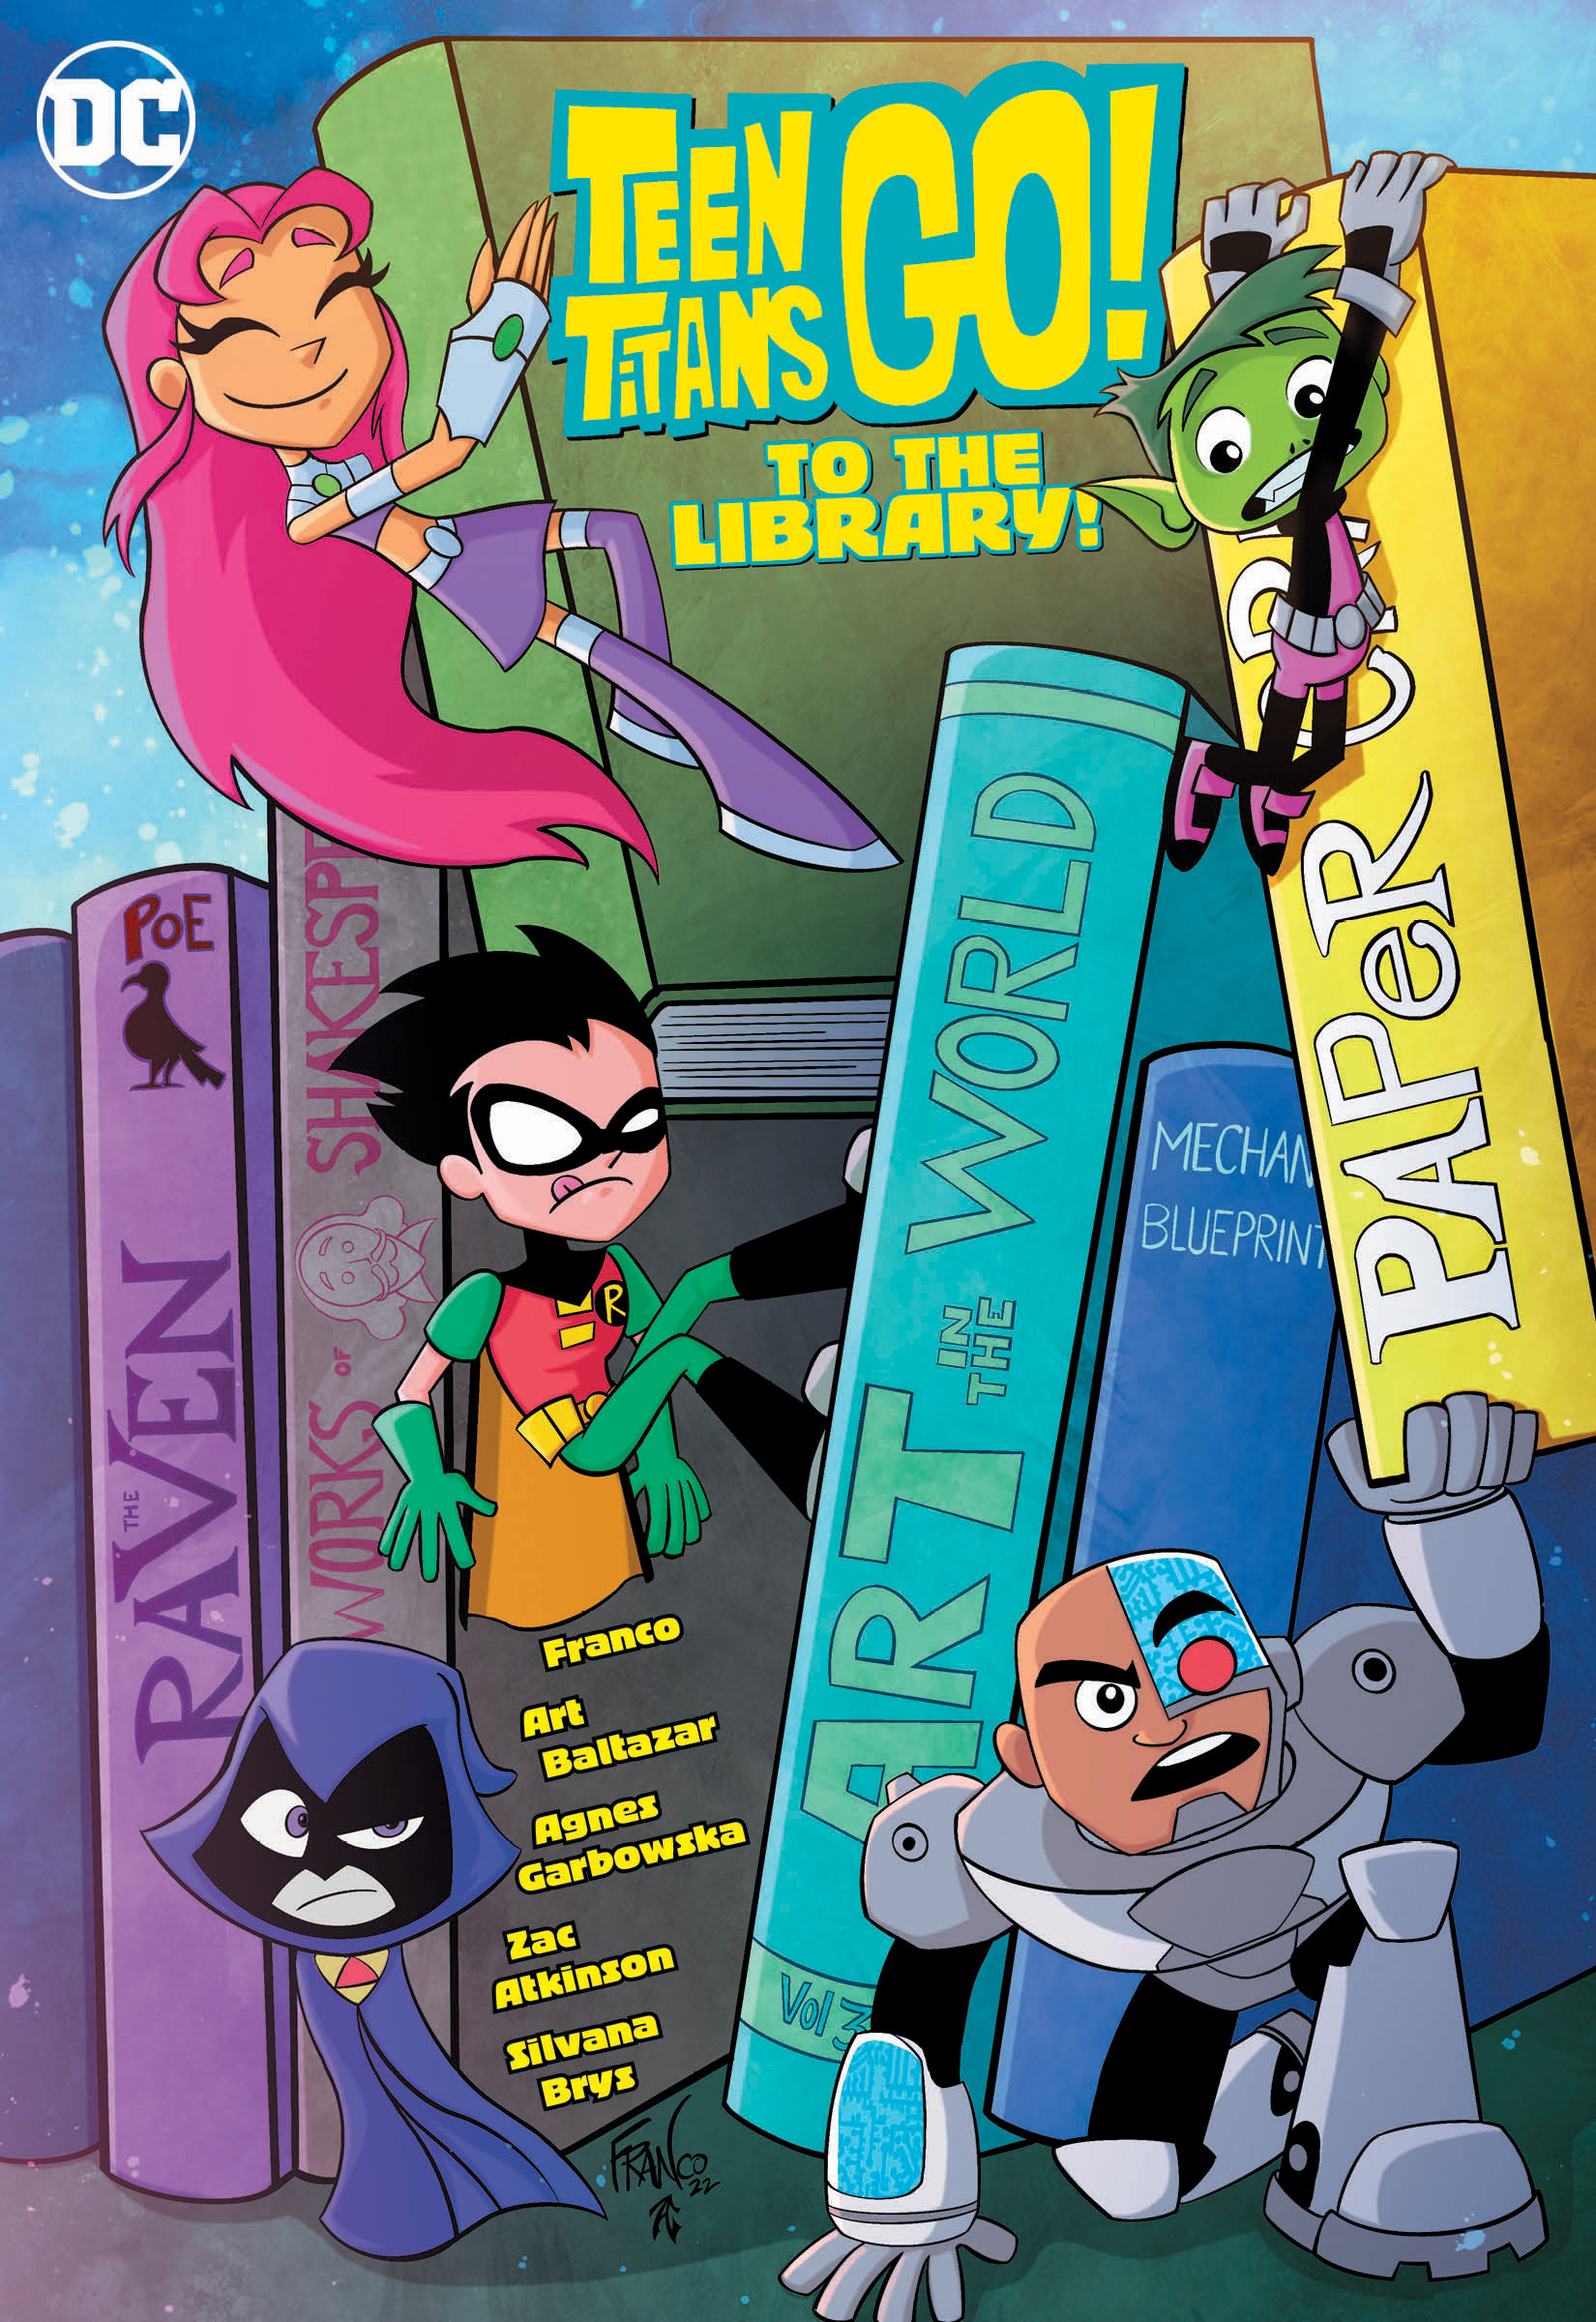 Teen Titans Go! To the Library! | Franco (Auteur) | Baltazar, Art (Auteur) | Franco (Illustrateur) | Baltazar, Art (Illustrateur)